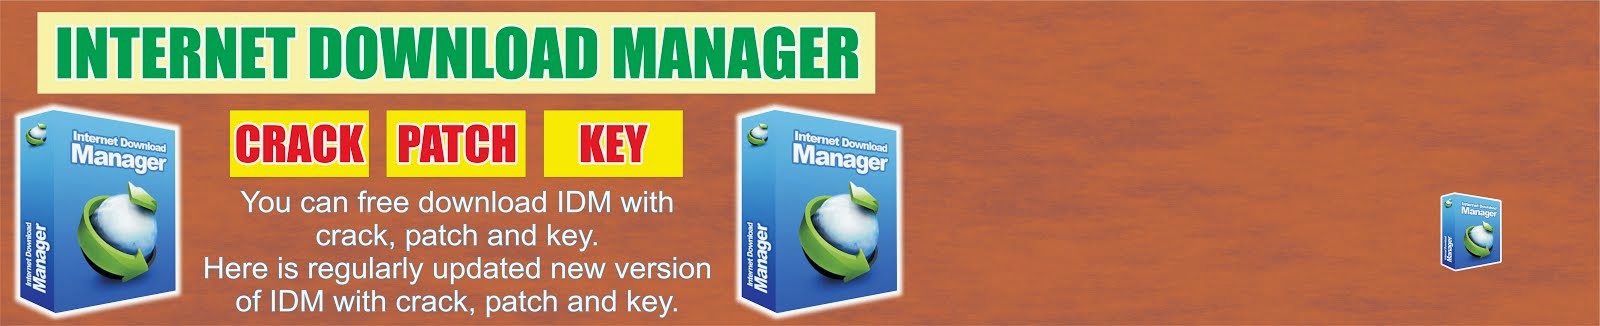 Internet Download Manager, IDM, Crack, Patch, Key, Free Download